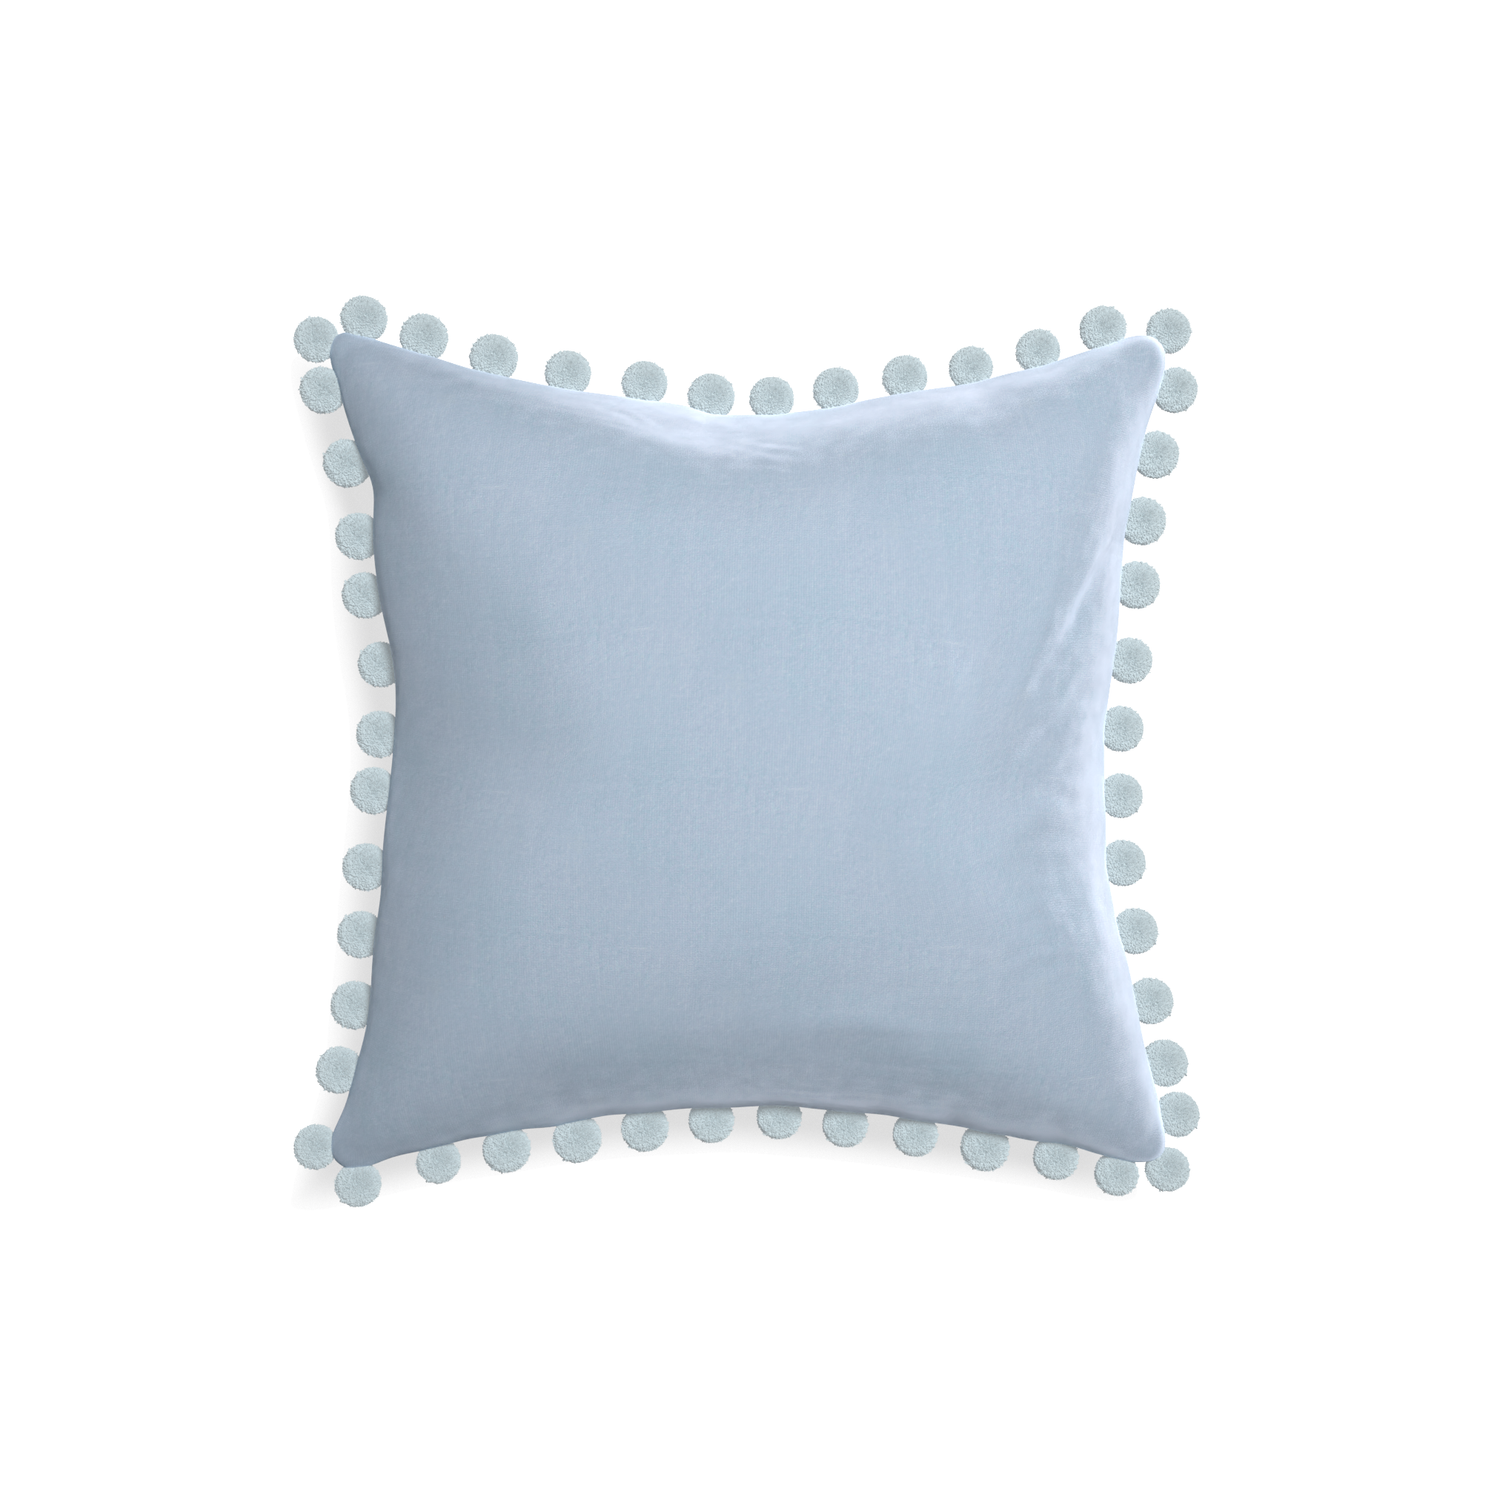 square light blue velvet pillow with light blue pom pom